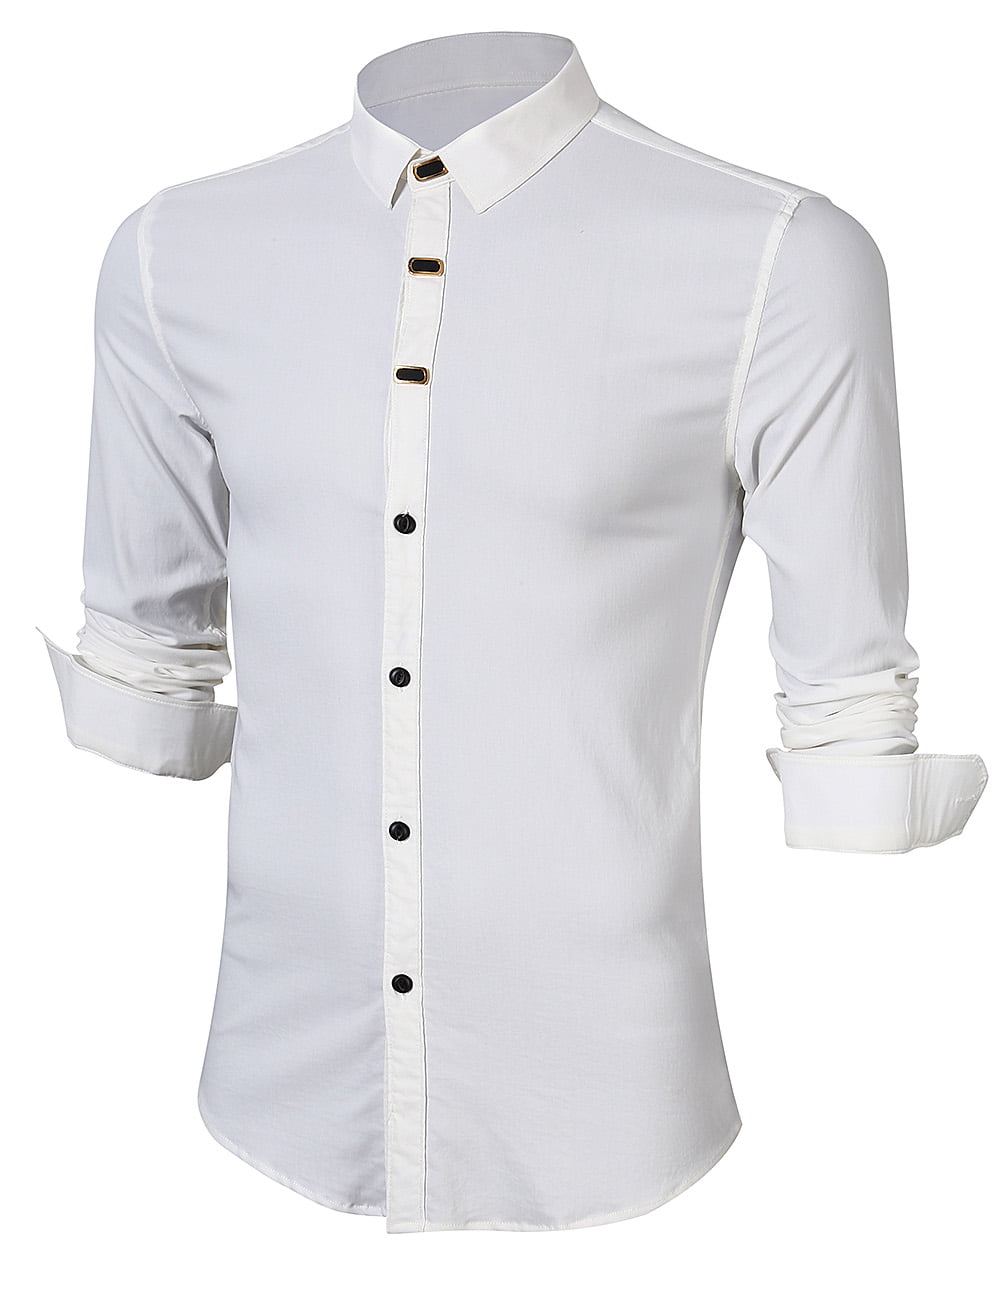 YUNY Men Long Sleeve Stretch Fashion Casual Loose Dress Shirt Tops White 2XL 